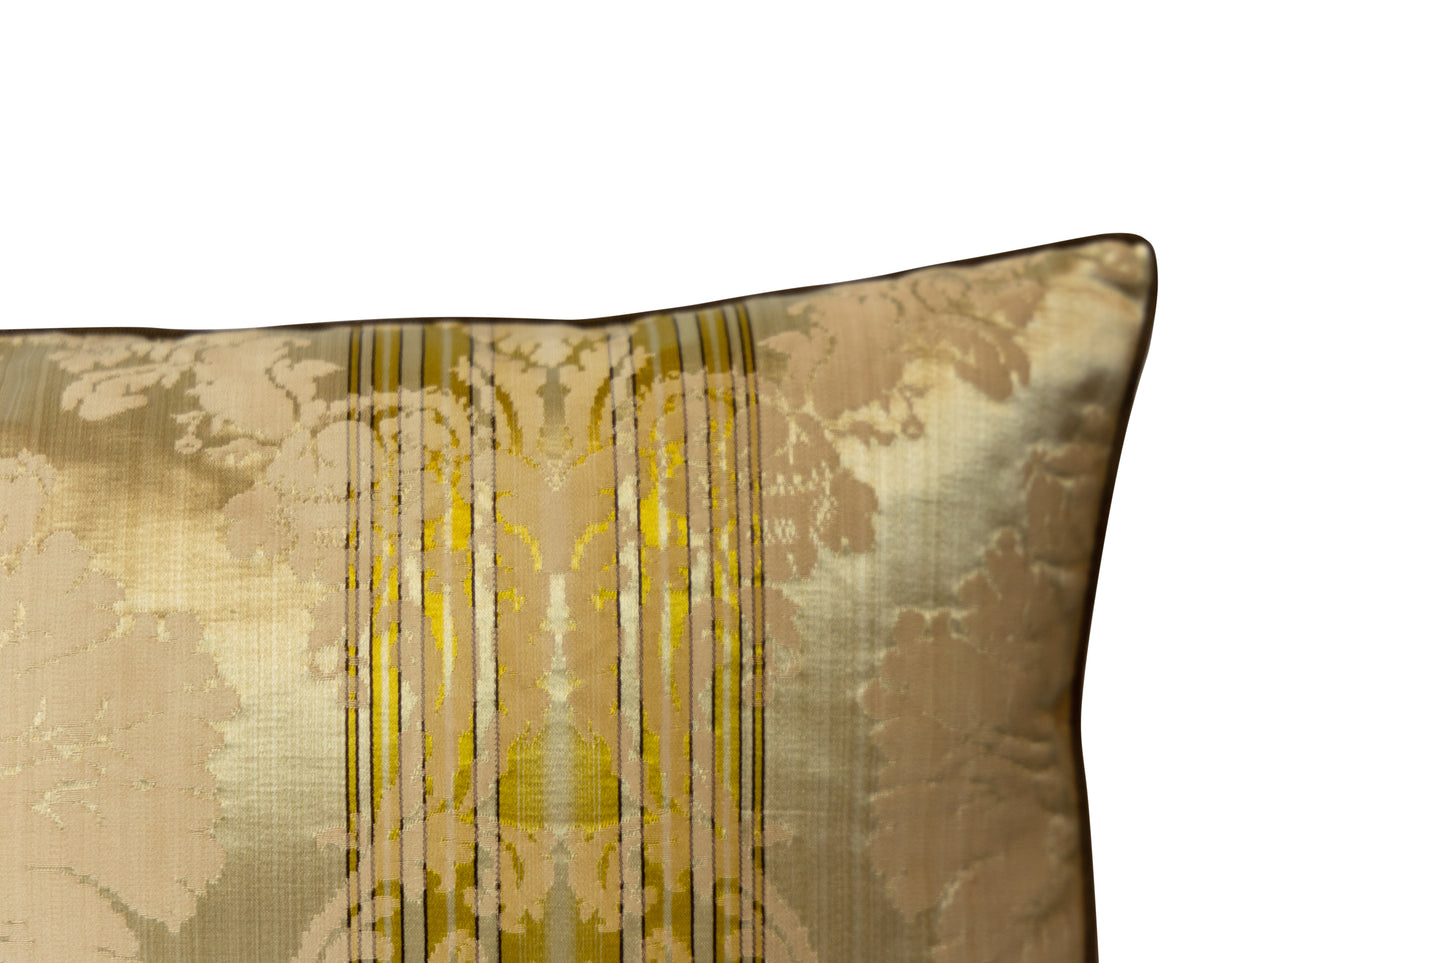 Lumbar Cushion in Vintage Silk Damask